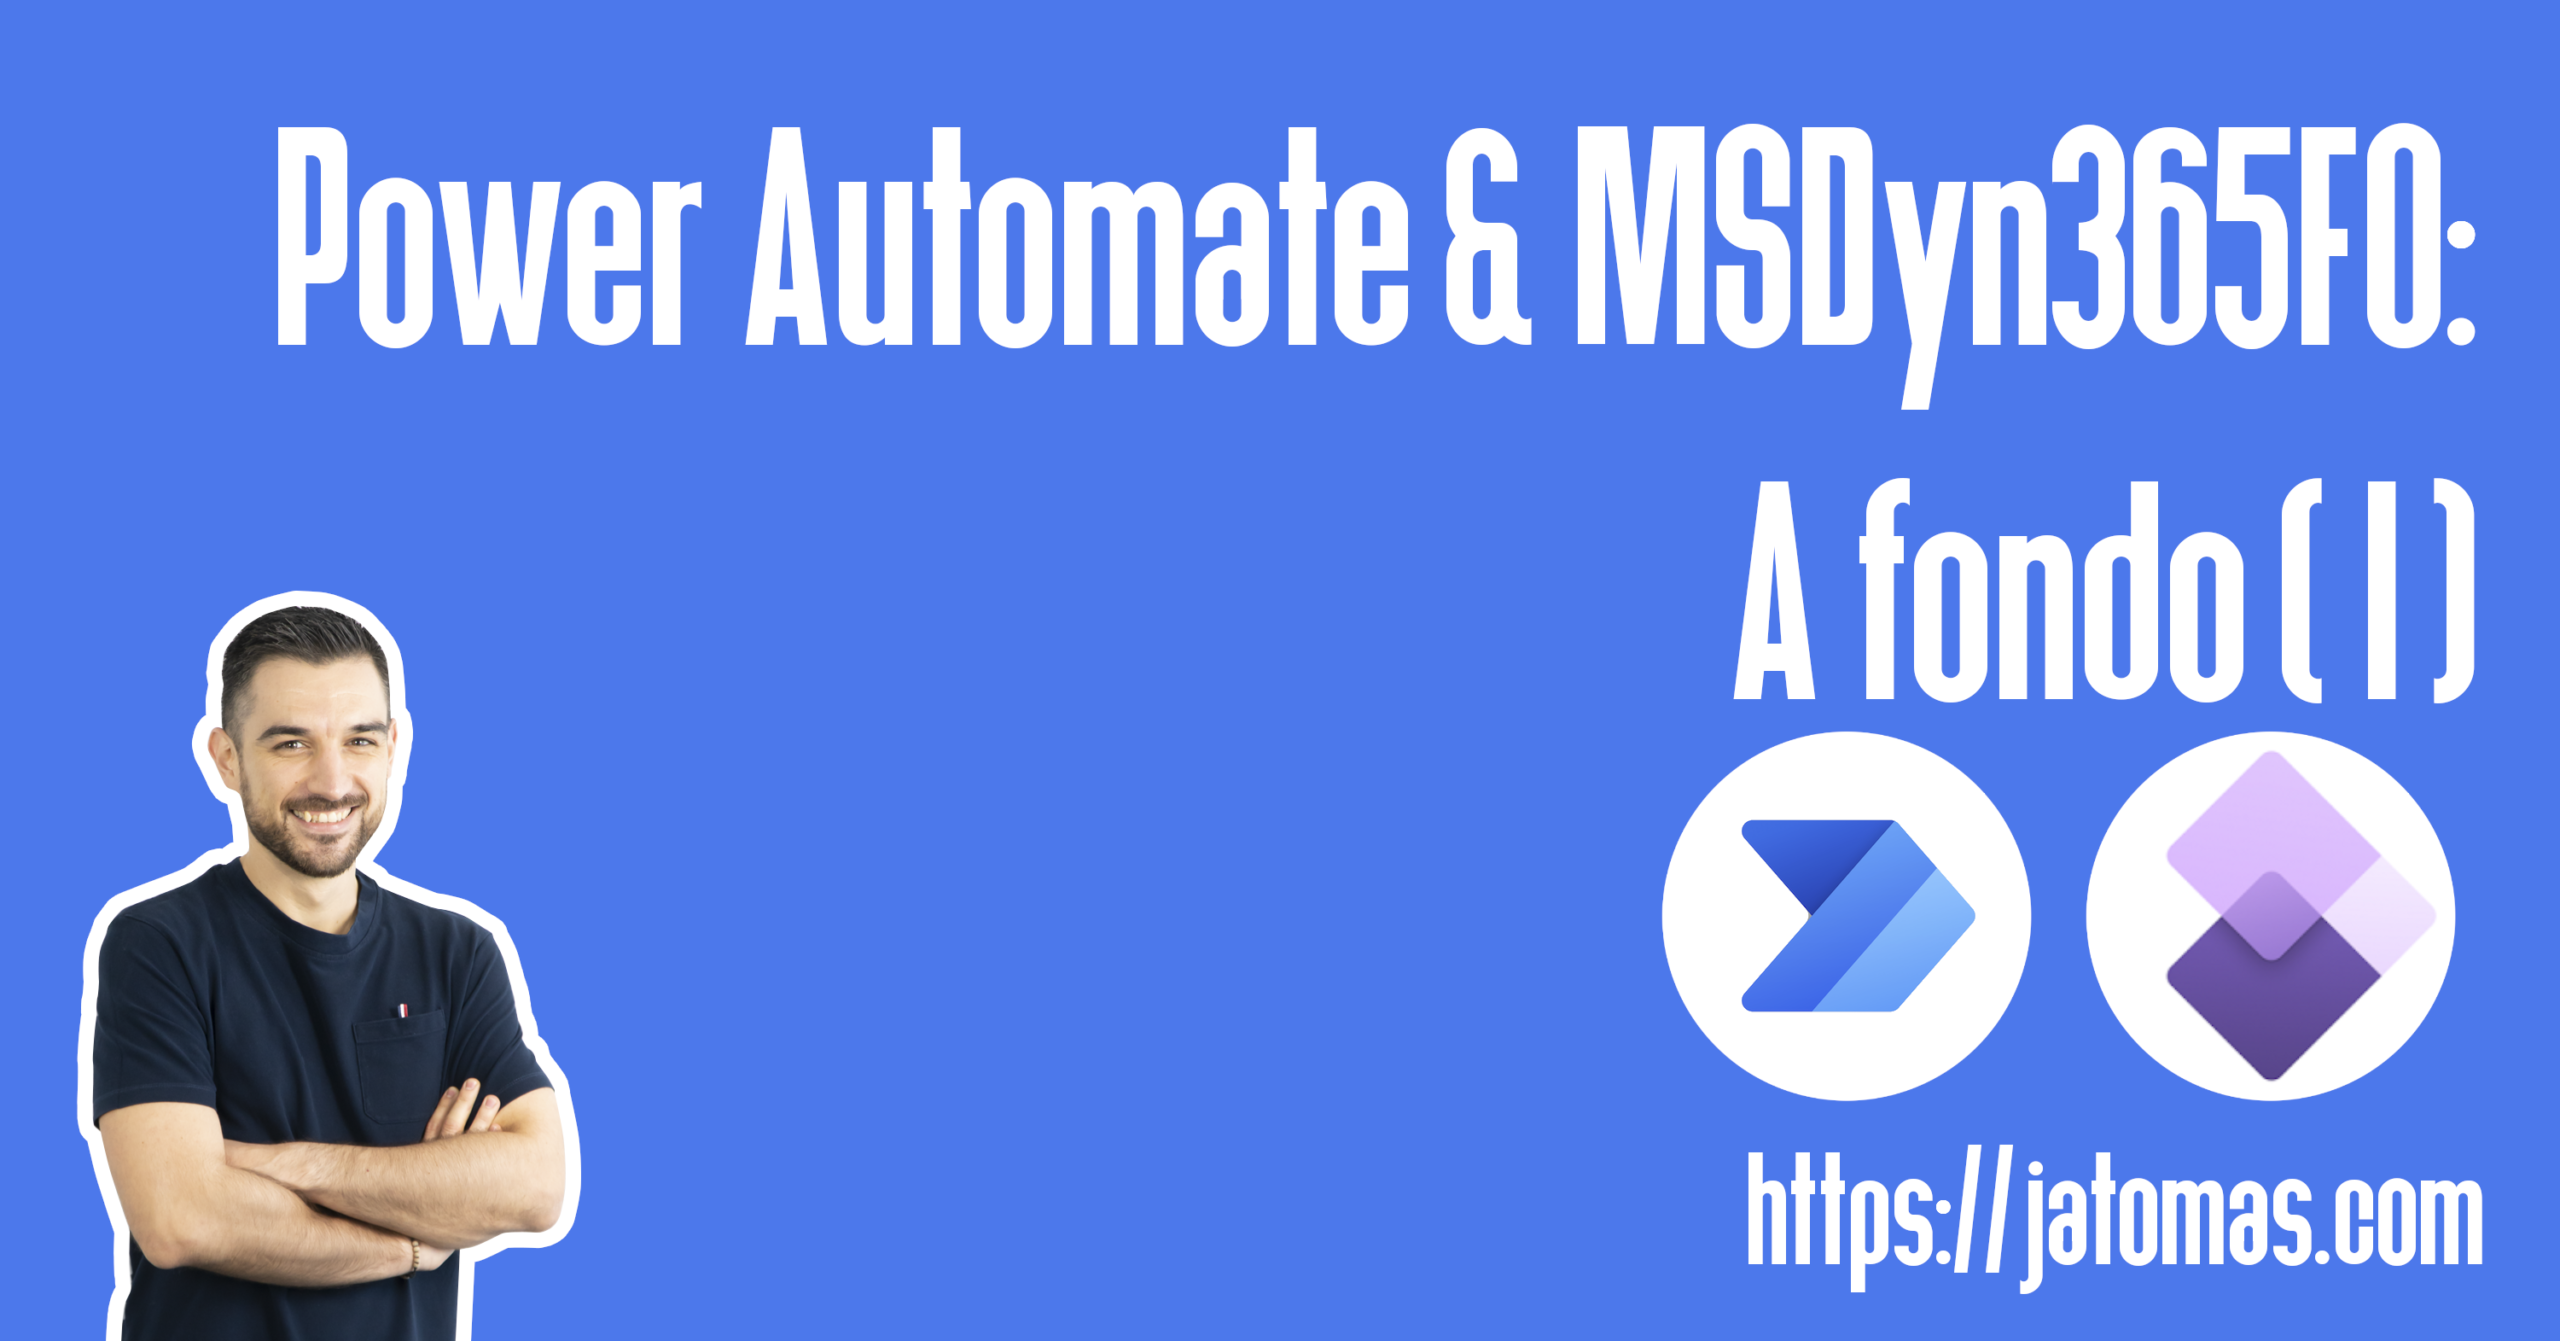 Power Automate & MSDyn365FO: A fondo (I)